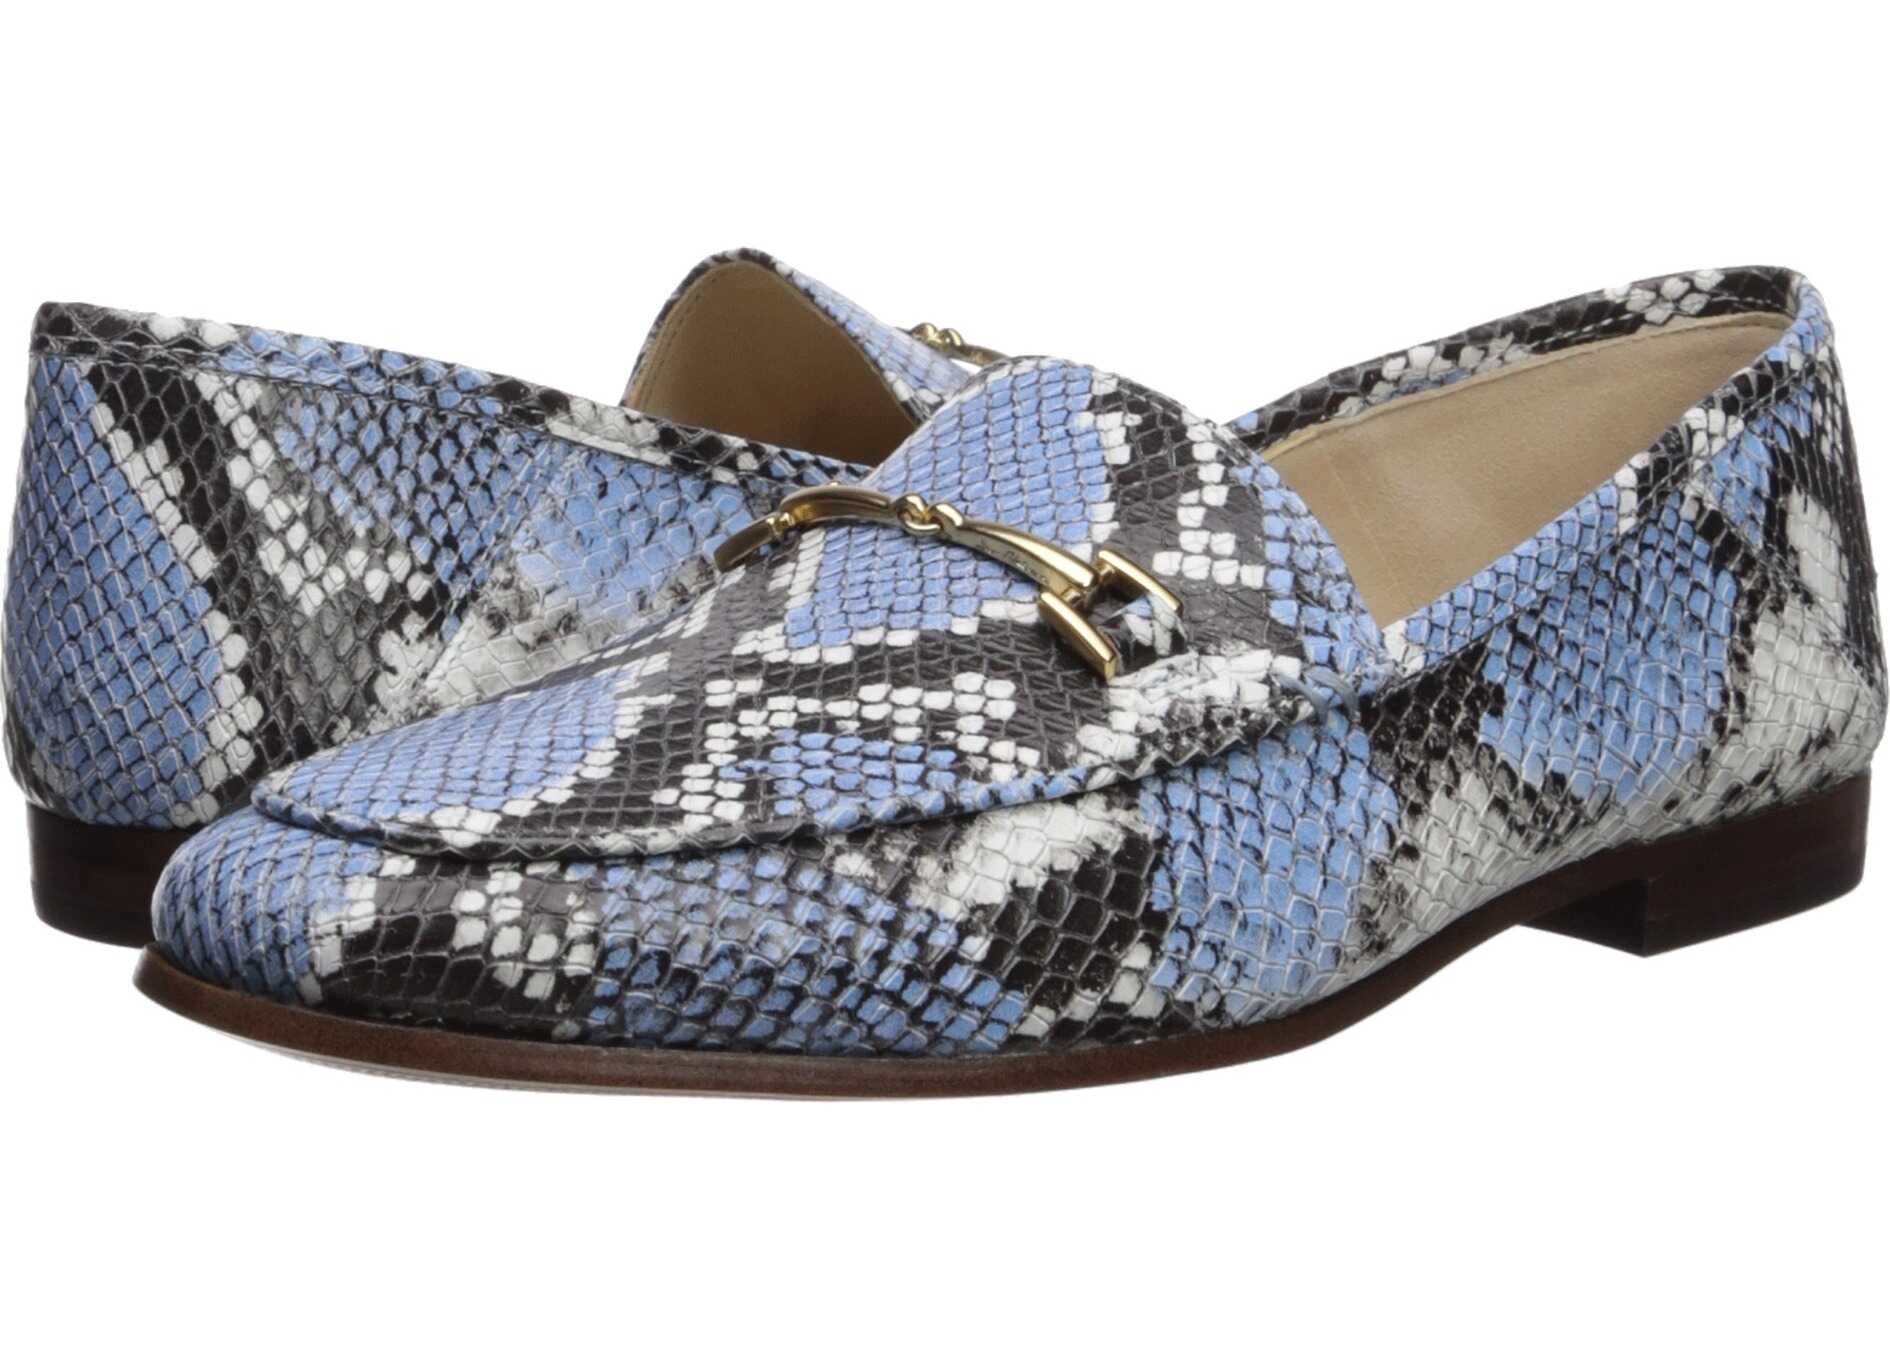 Sam Edelman Loraine Loafer Cornflower Blue Multi Exotic Snake Print Leather